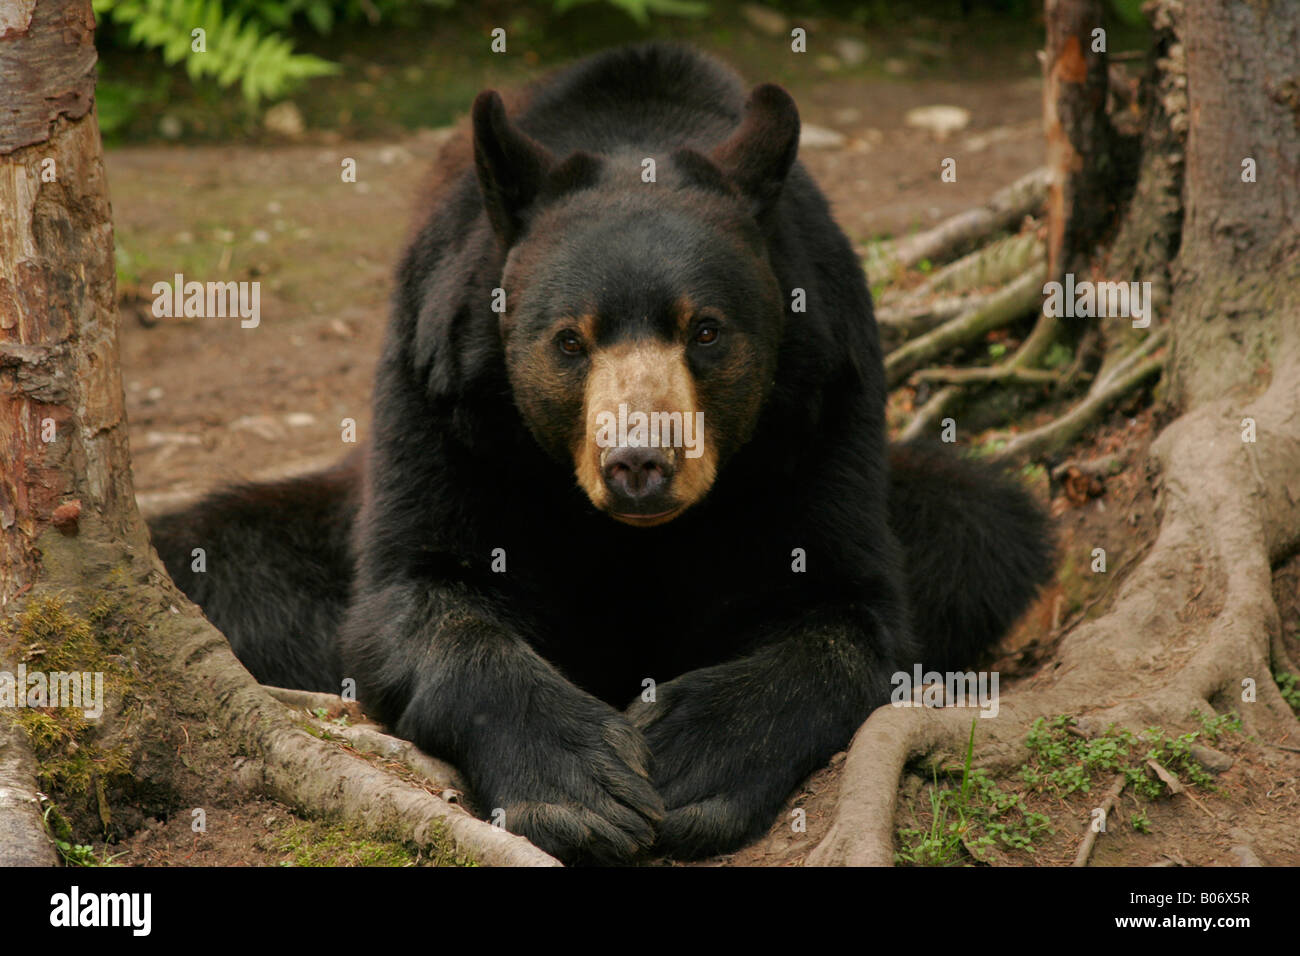 Black bear squatting Stock Photo